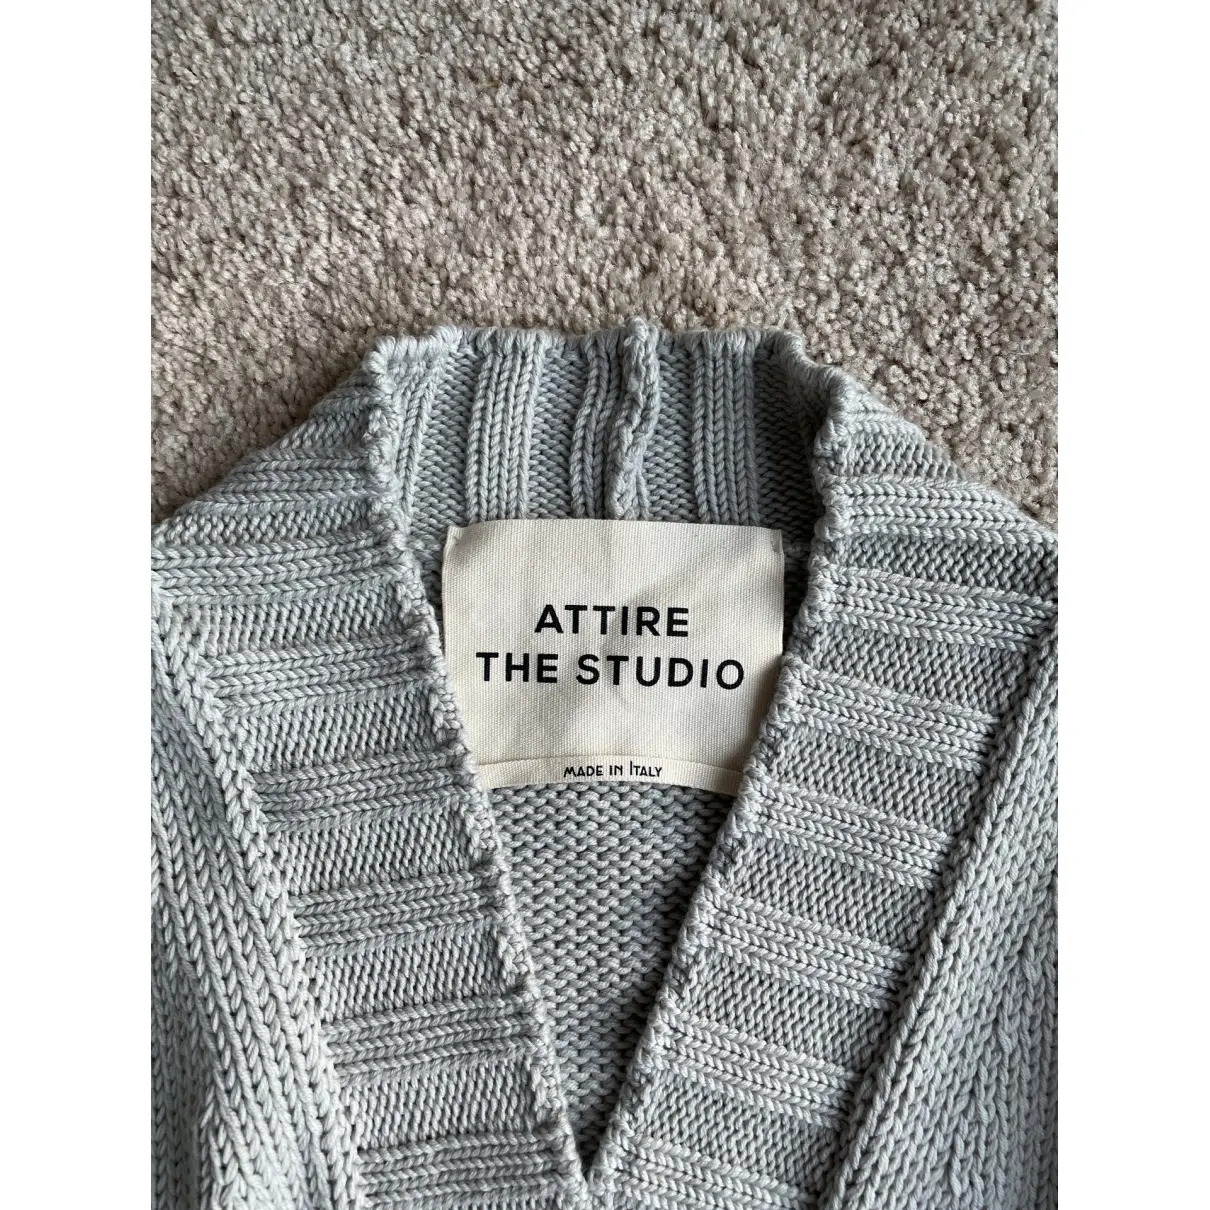 Buy Attire the studio Wool cardigan online